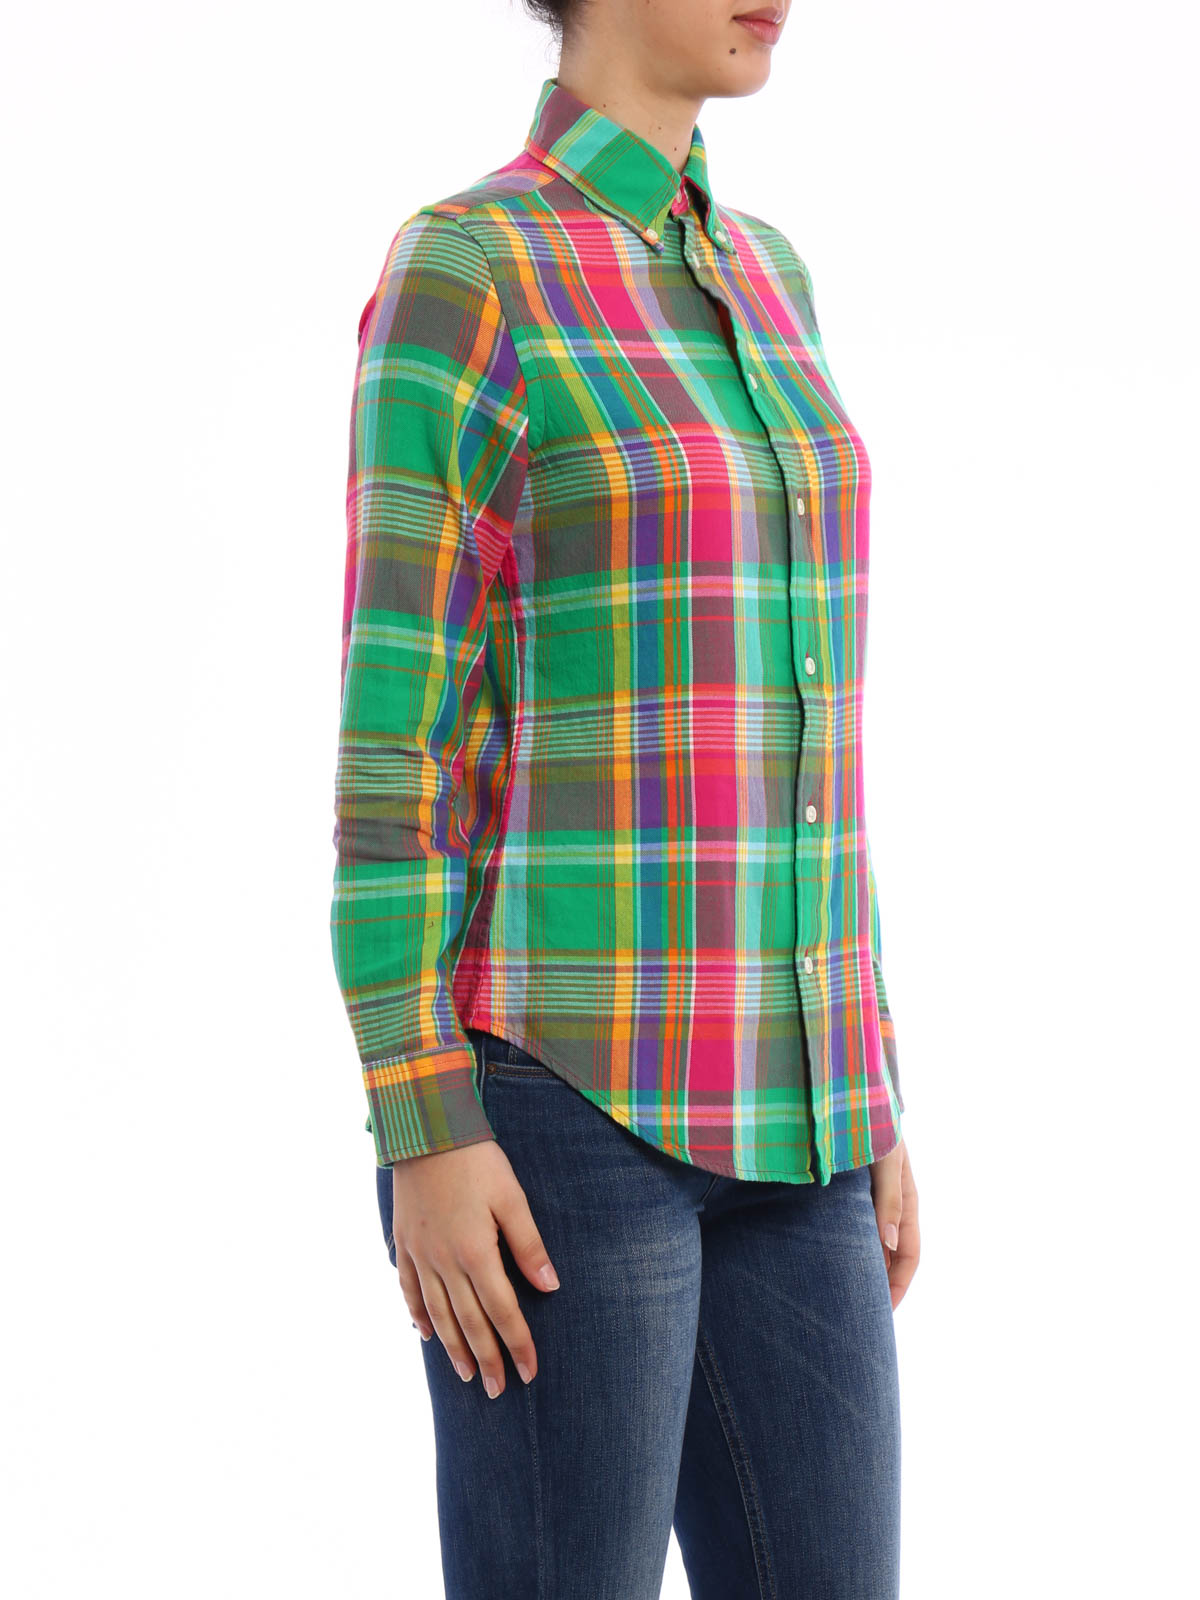 Shirts Polo Ralph Lauren - Georgia cotton twill check shirt -  V33IH738BH738J3H00